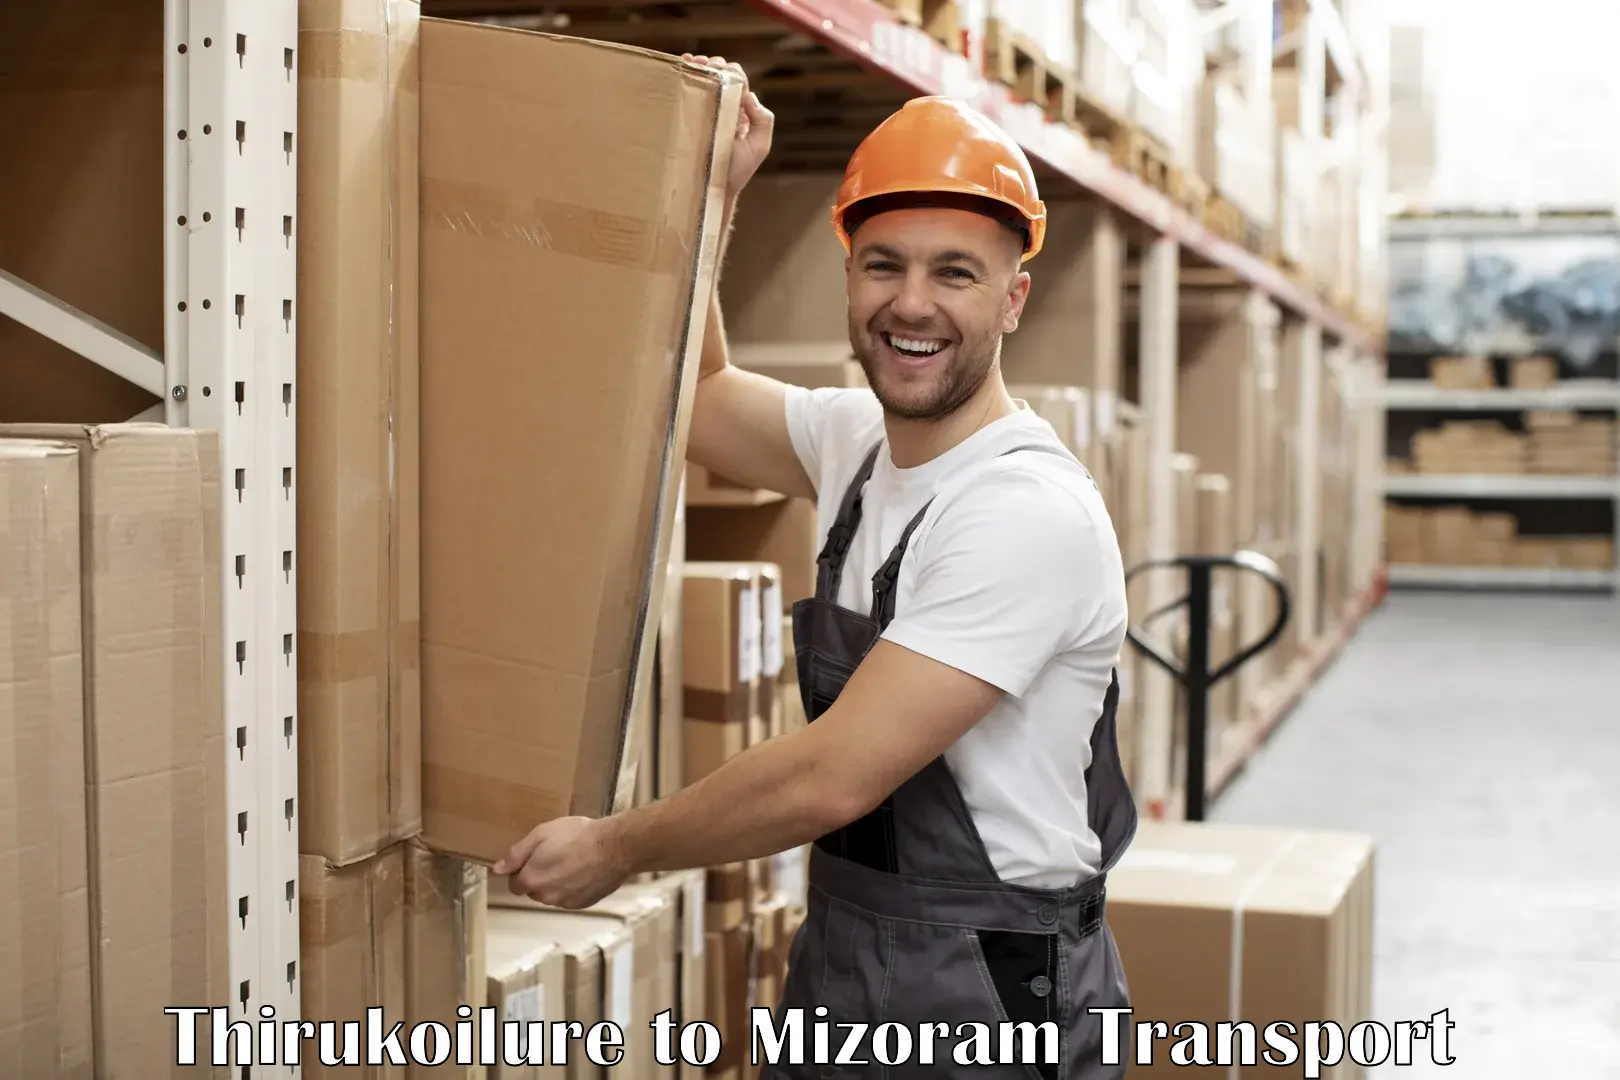 Two wheeler parcel service Thirukoilure to Mizoram